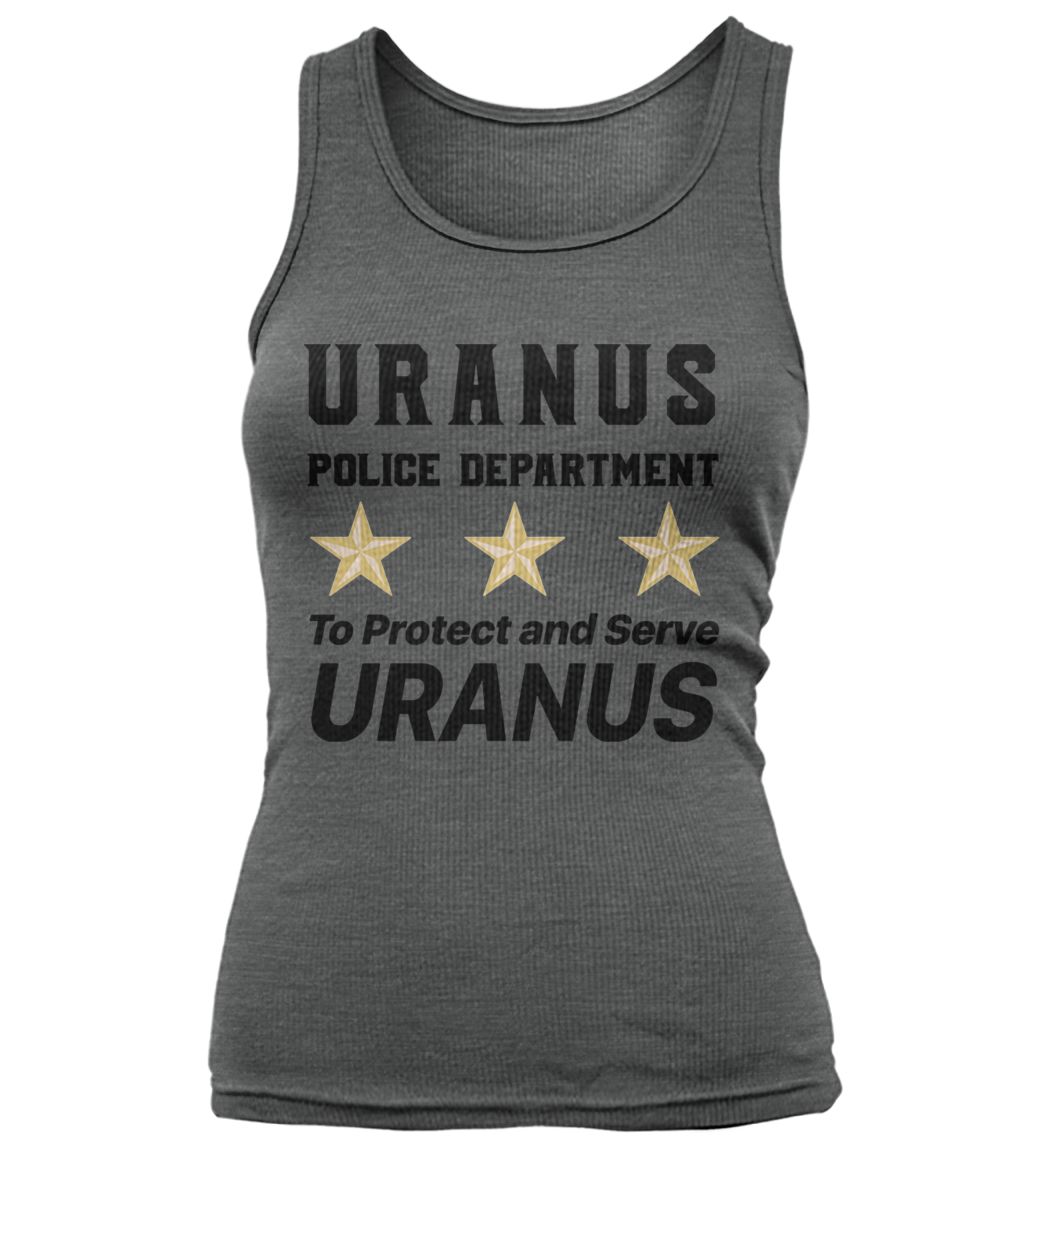 Uranus police department to protect and serve uranus women's tank top